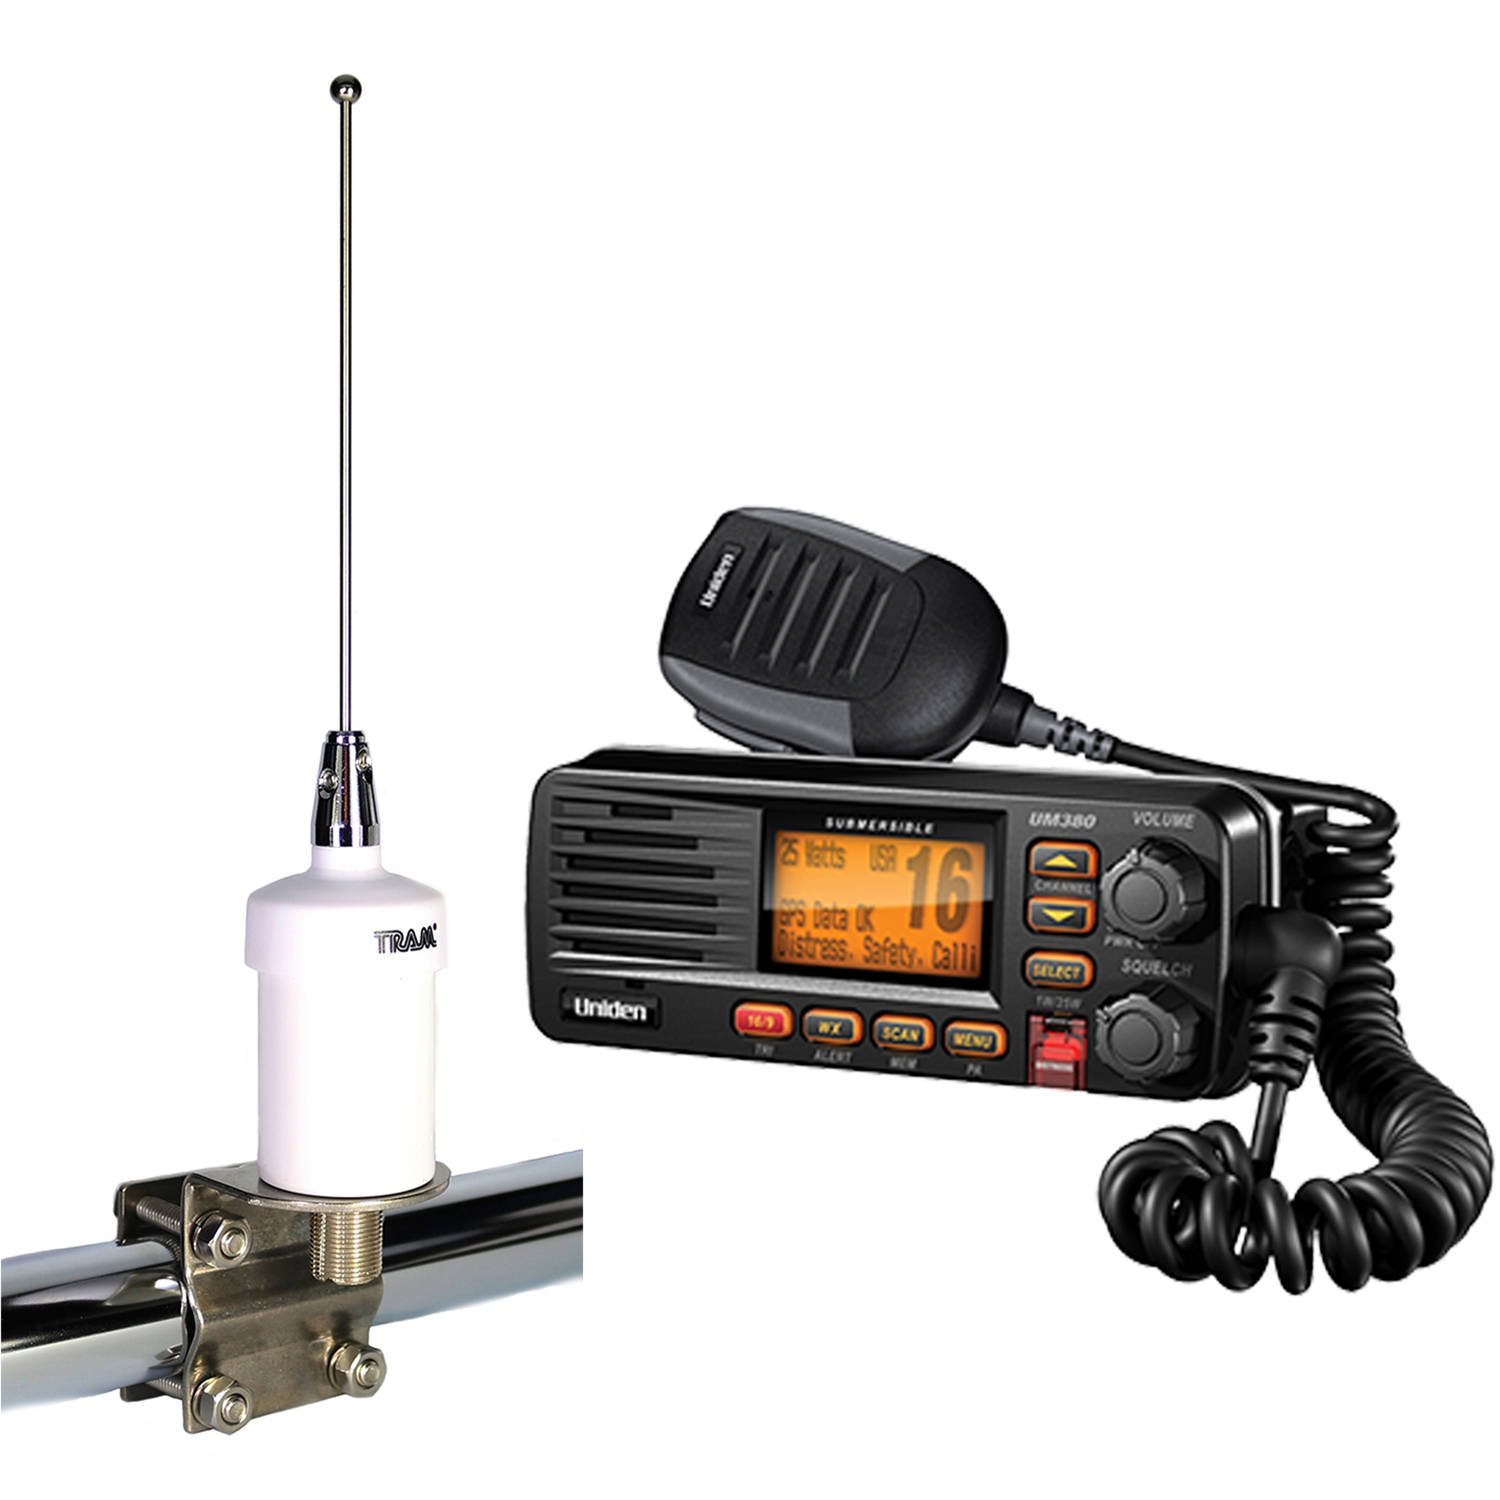 Uniden UM380 Fixed Mount VHF/2-way Marine Radio and Tram 1603 VHF Marine Antenna, White - image 1 of 1